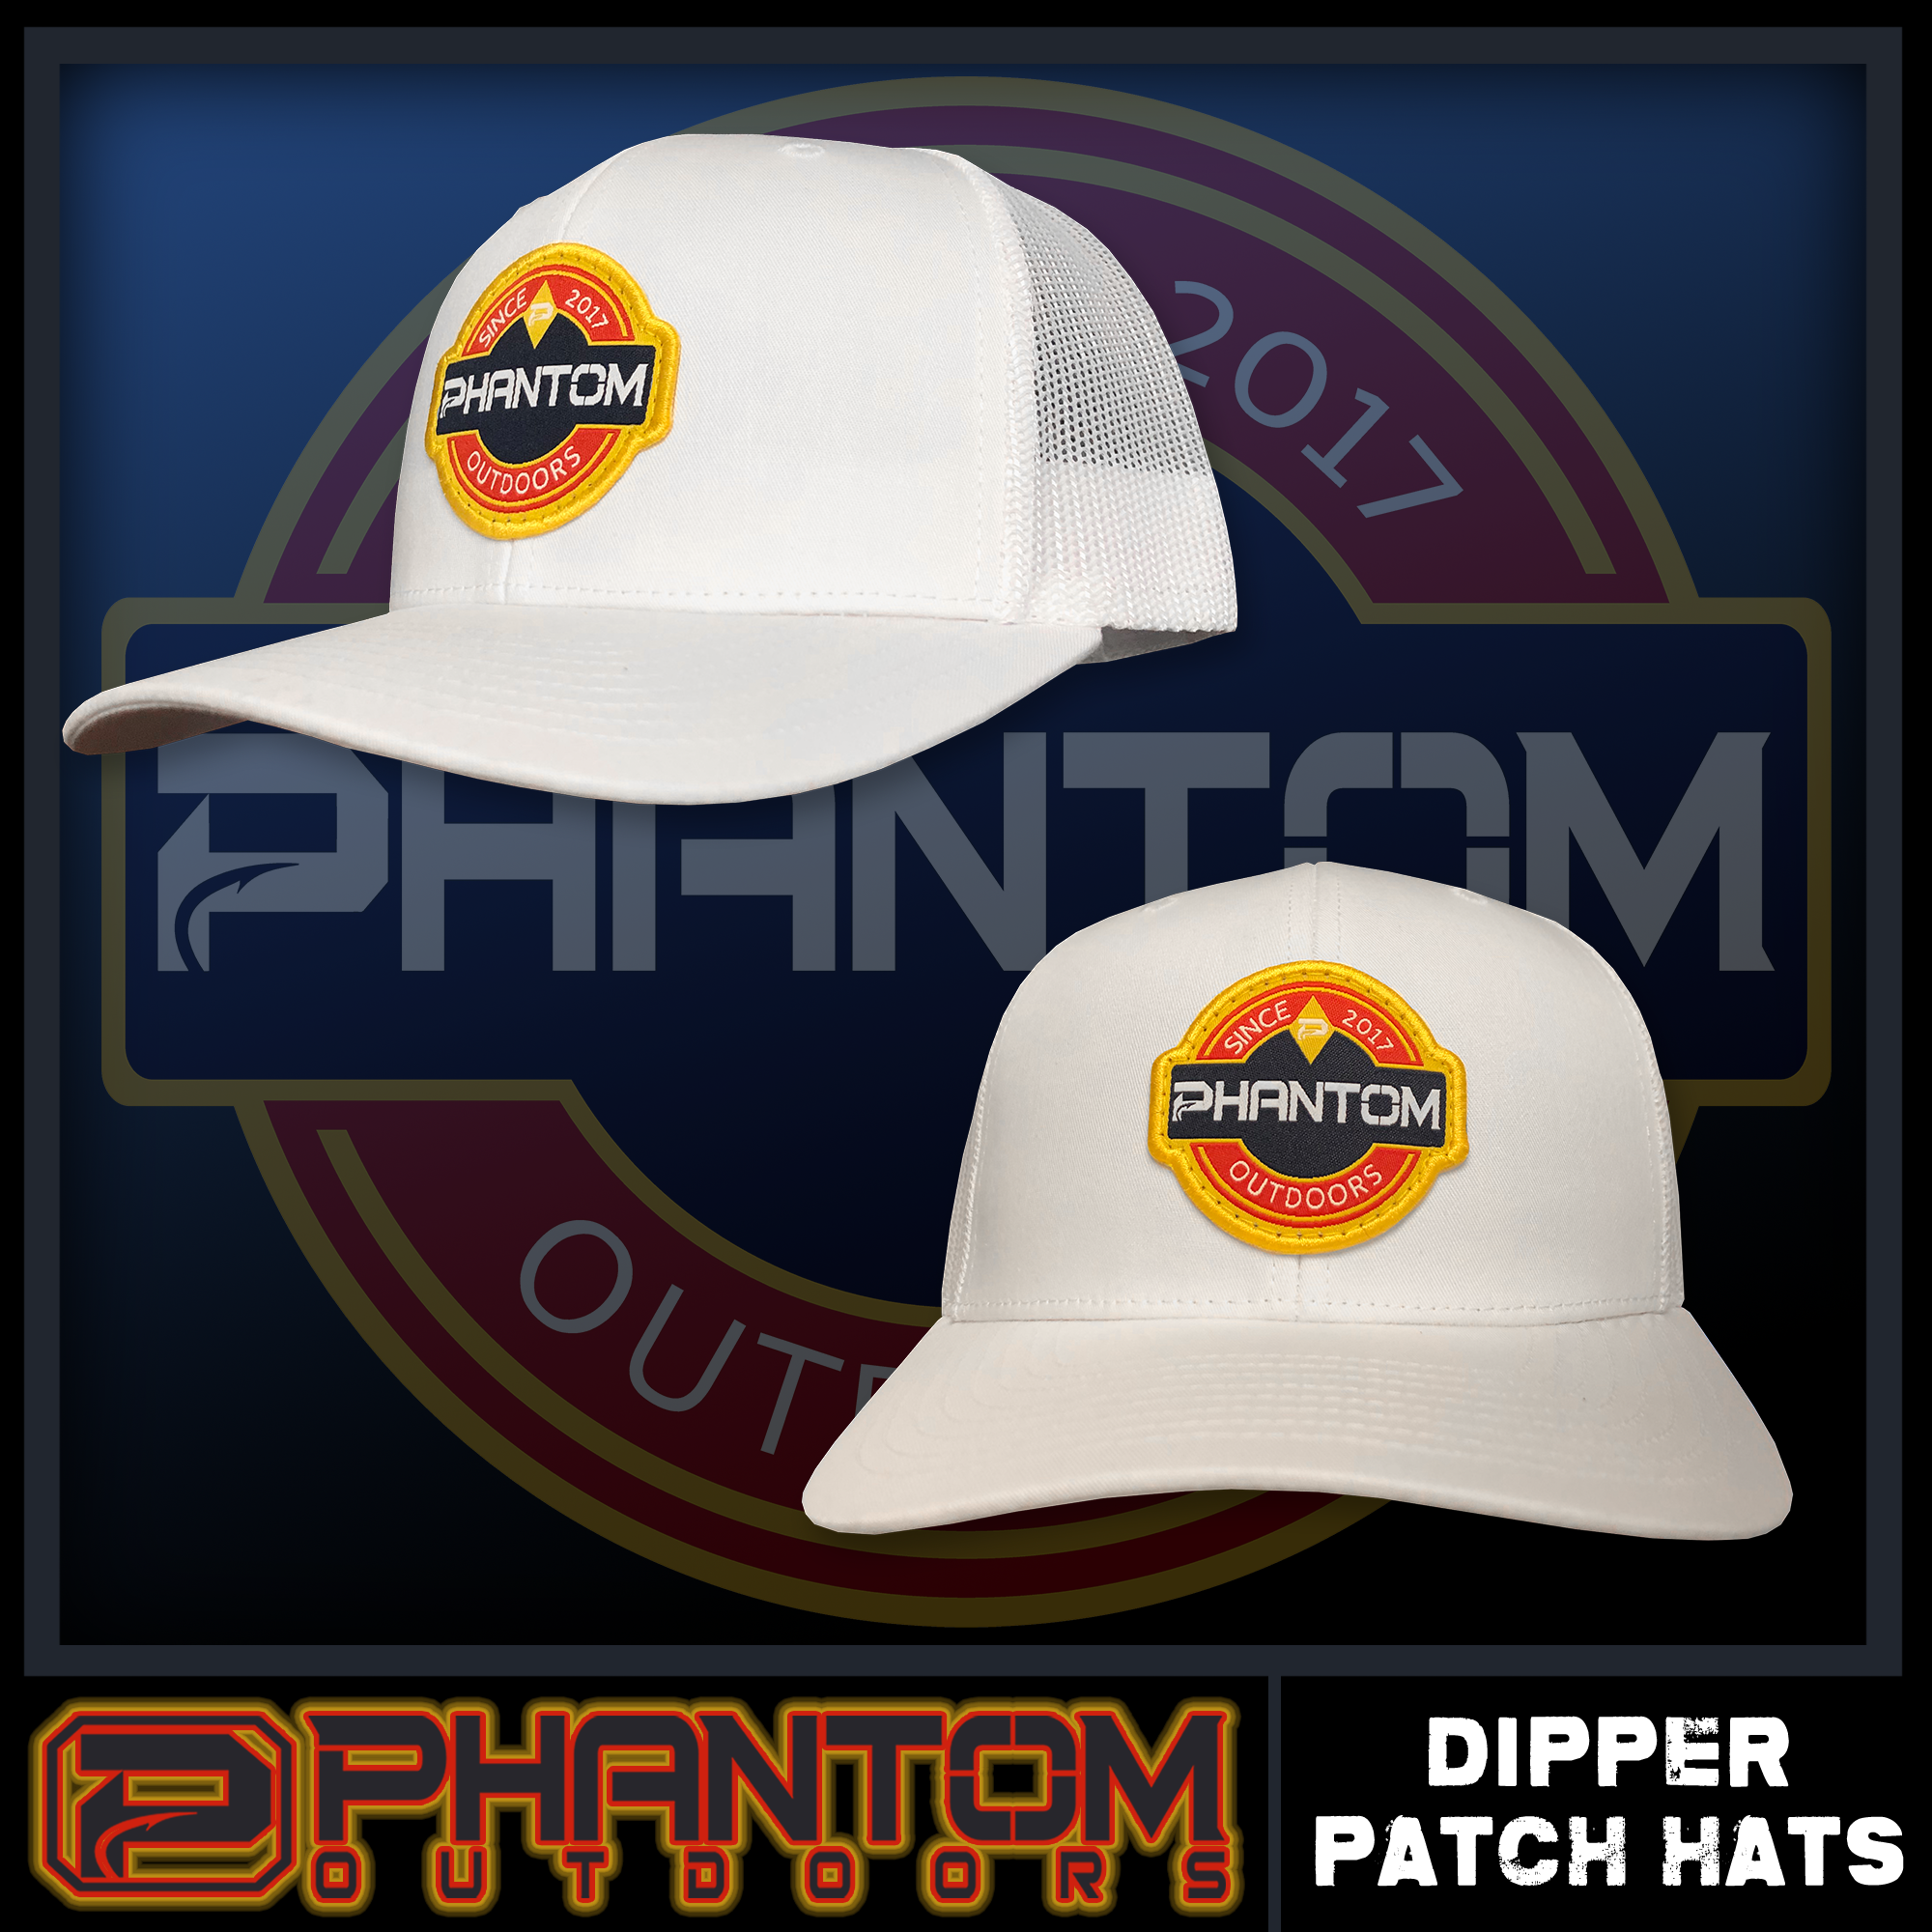 Phantom Outdoors "Dipper" Patch Hat